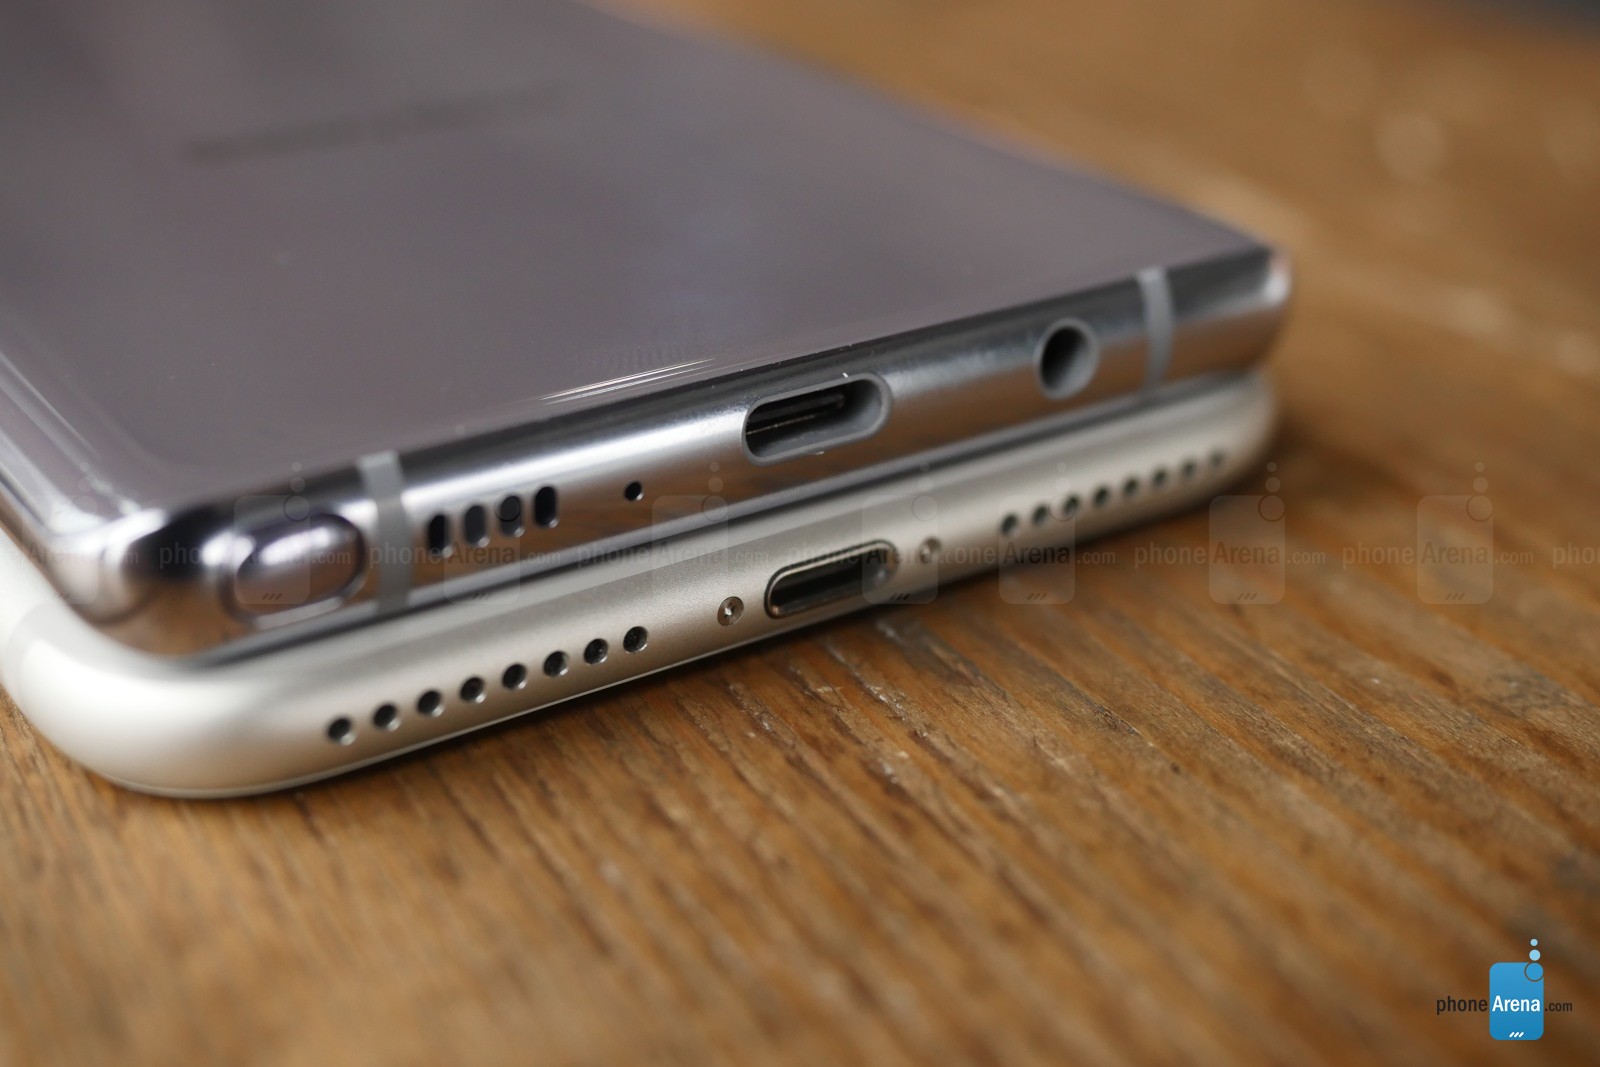 Samsung Galaxy Note 8 comparison iPhone 7 Plus 4